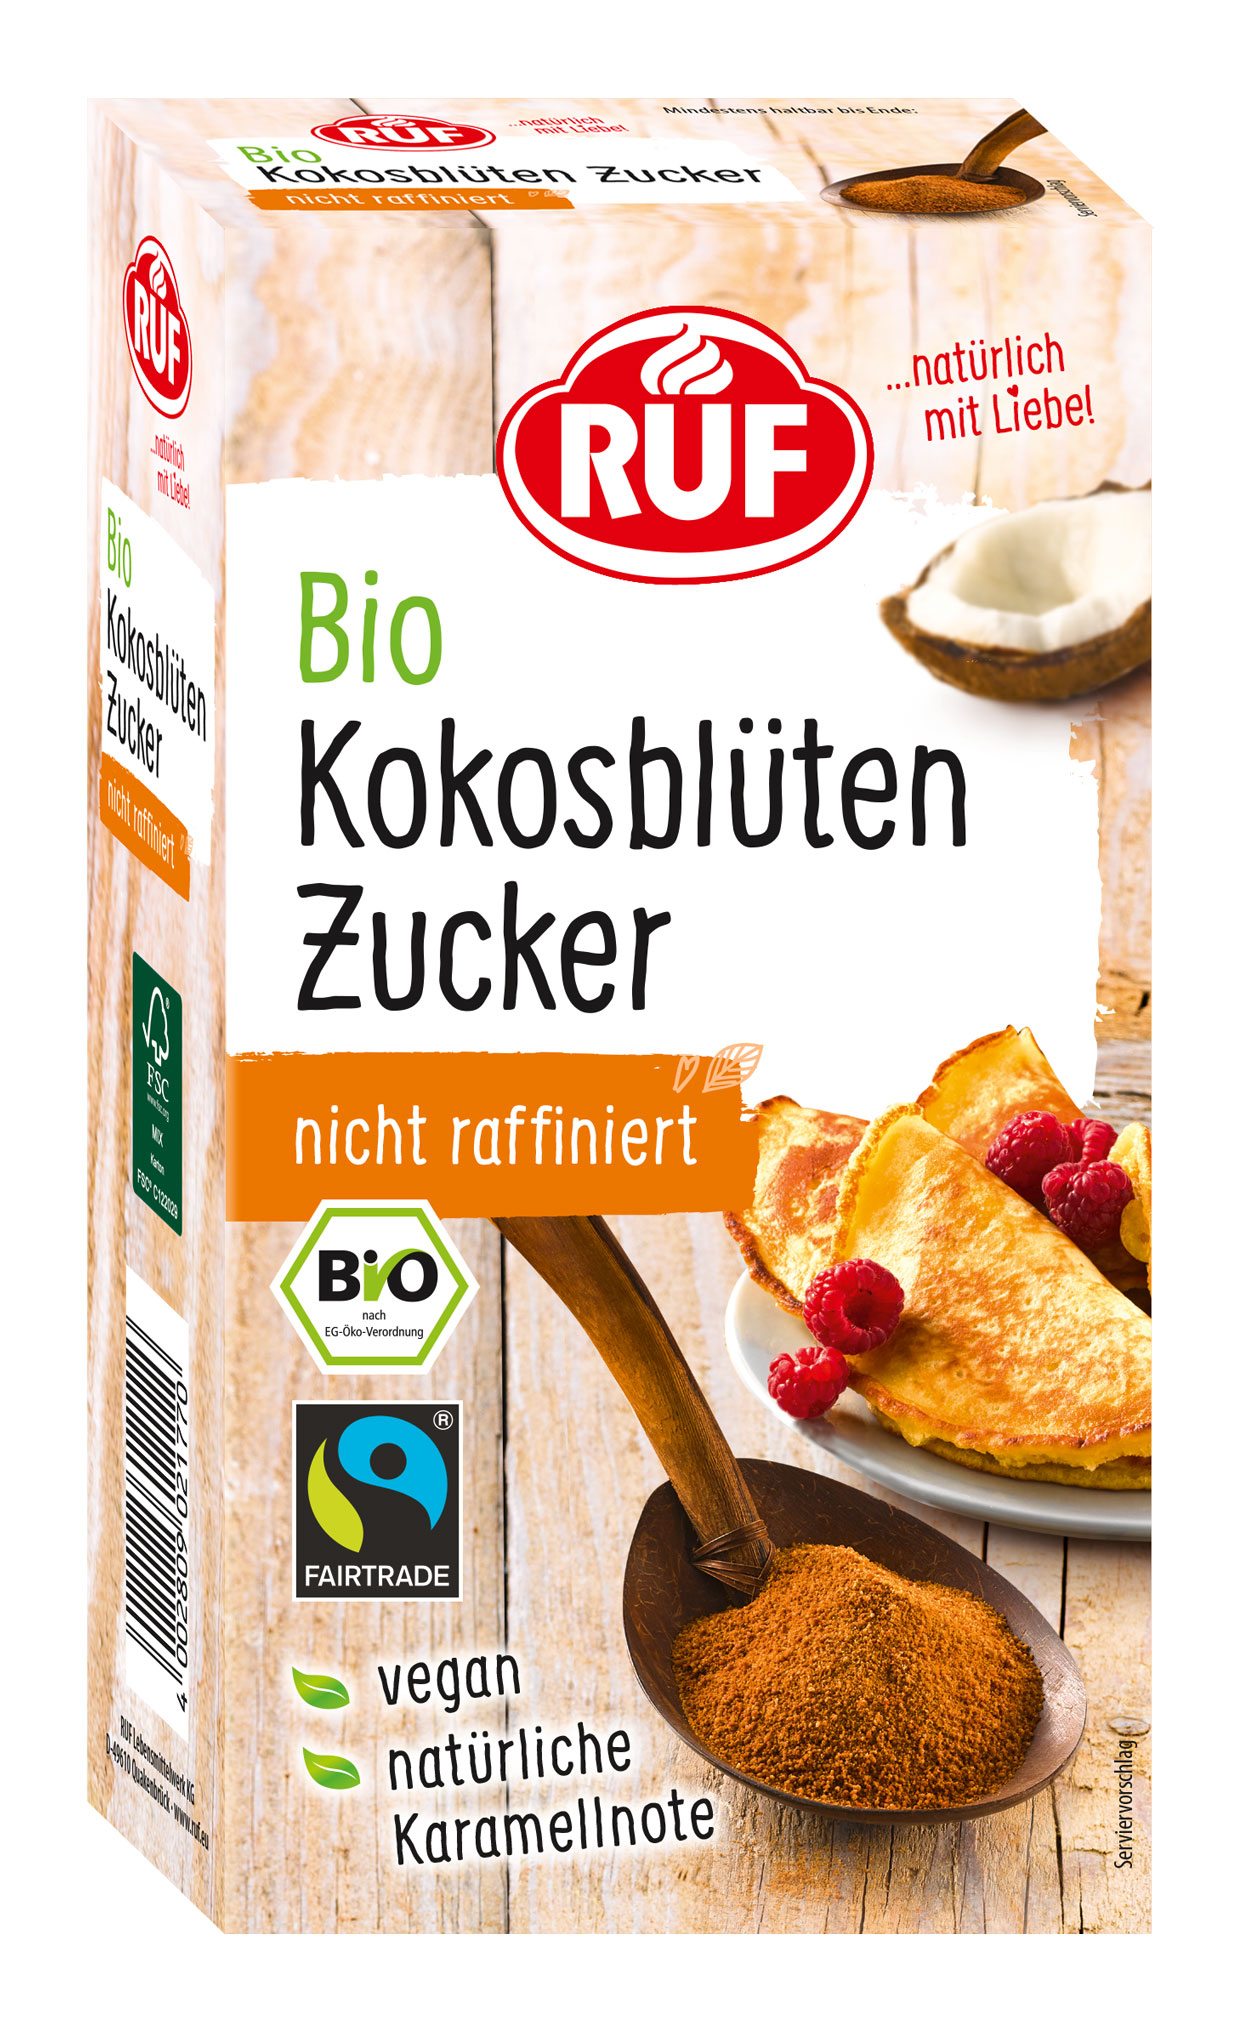 RUF Bio Kokosblütenzucker